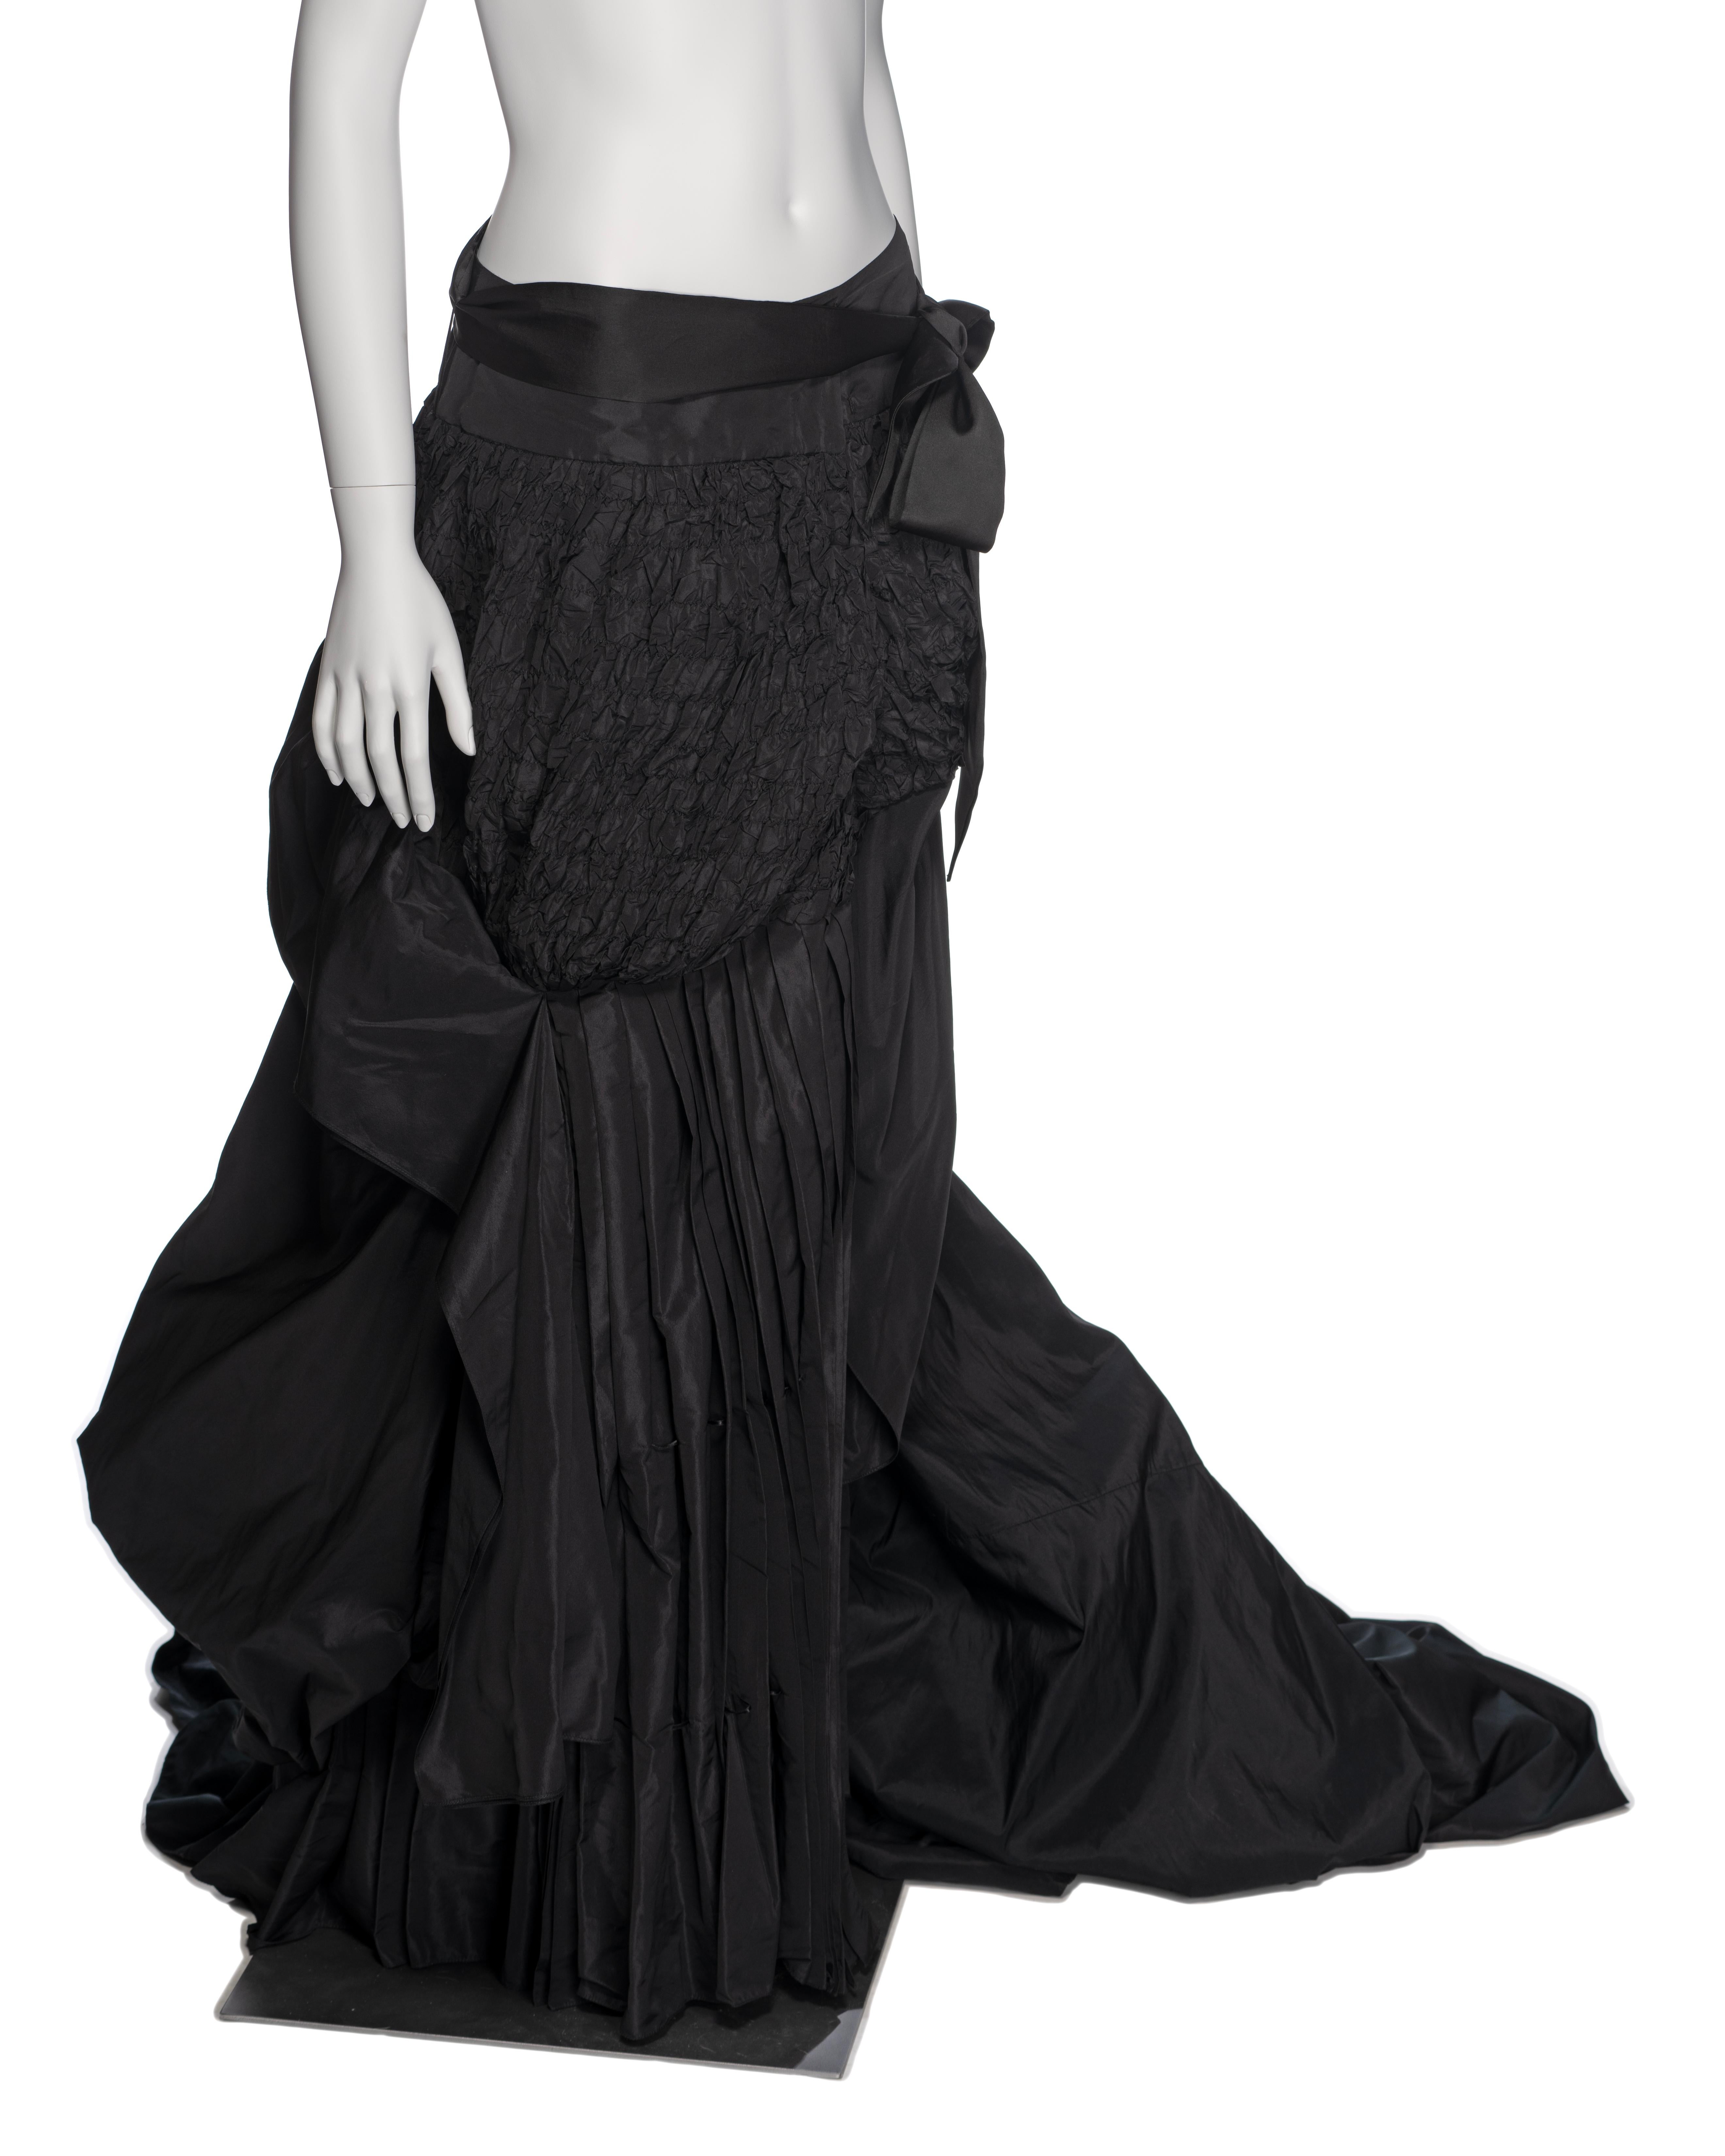 Yves Saint Laurent by Tom Ford Black Silk Taffeta Trained Evening Skirt, FW 2001 For Sale 6